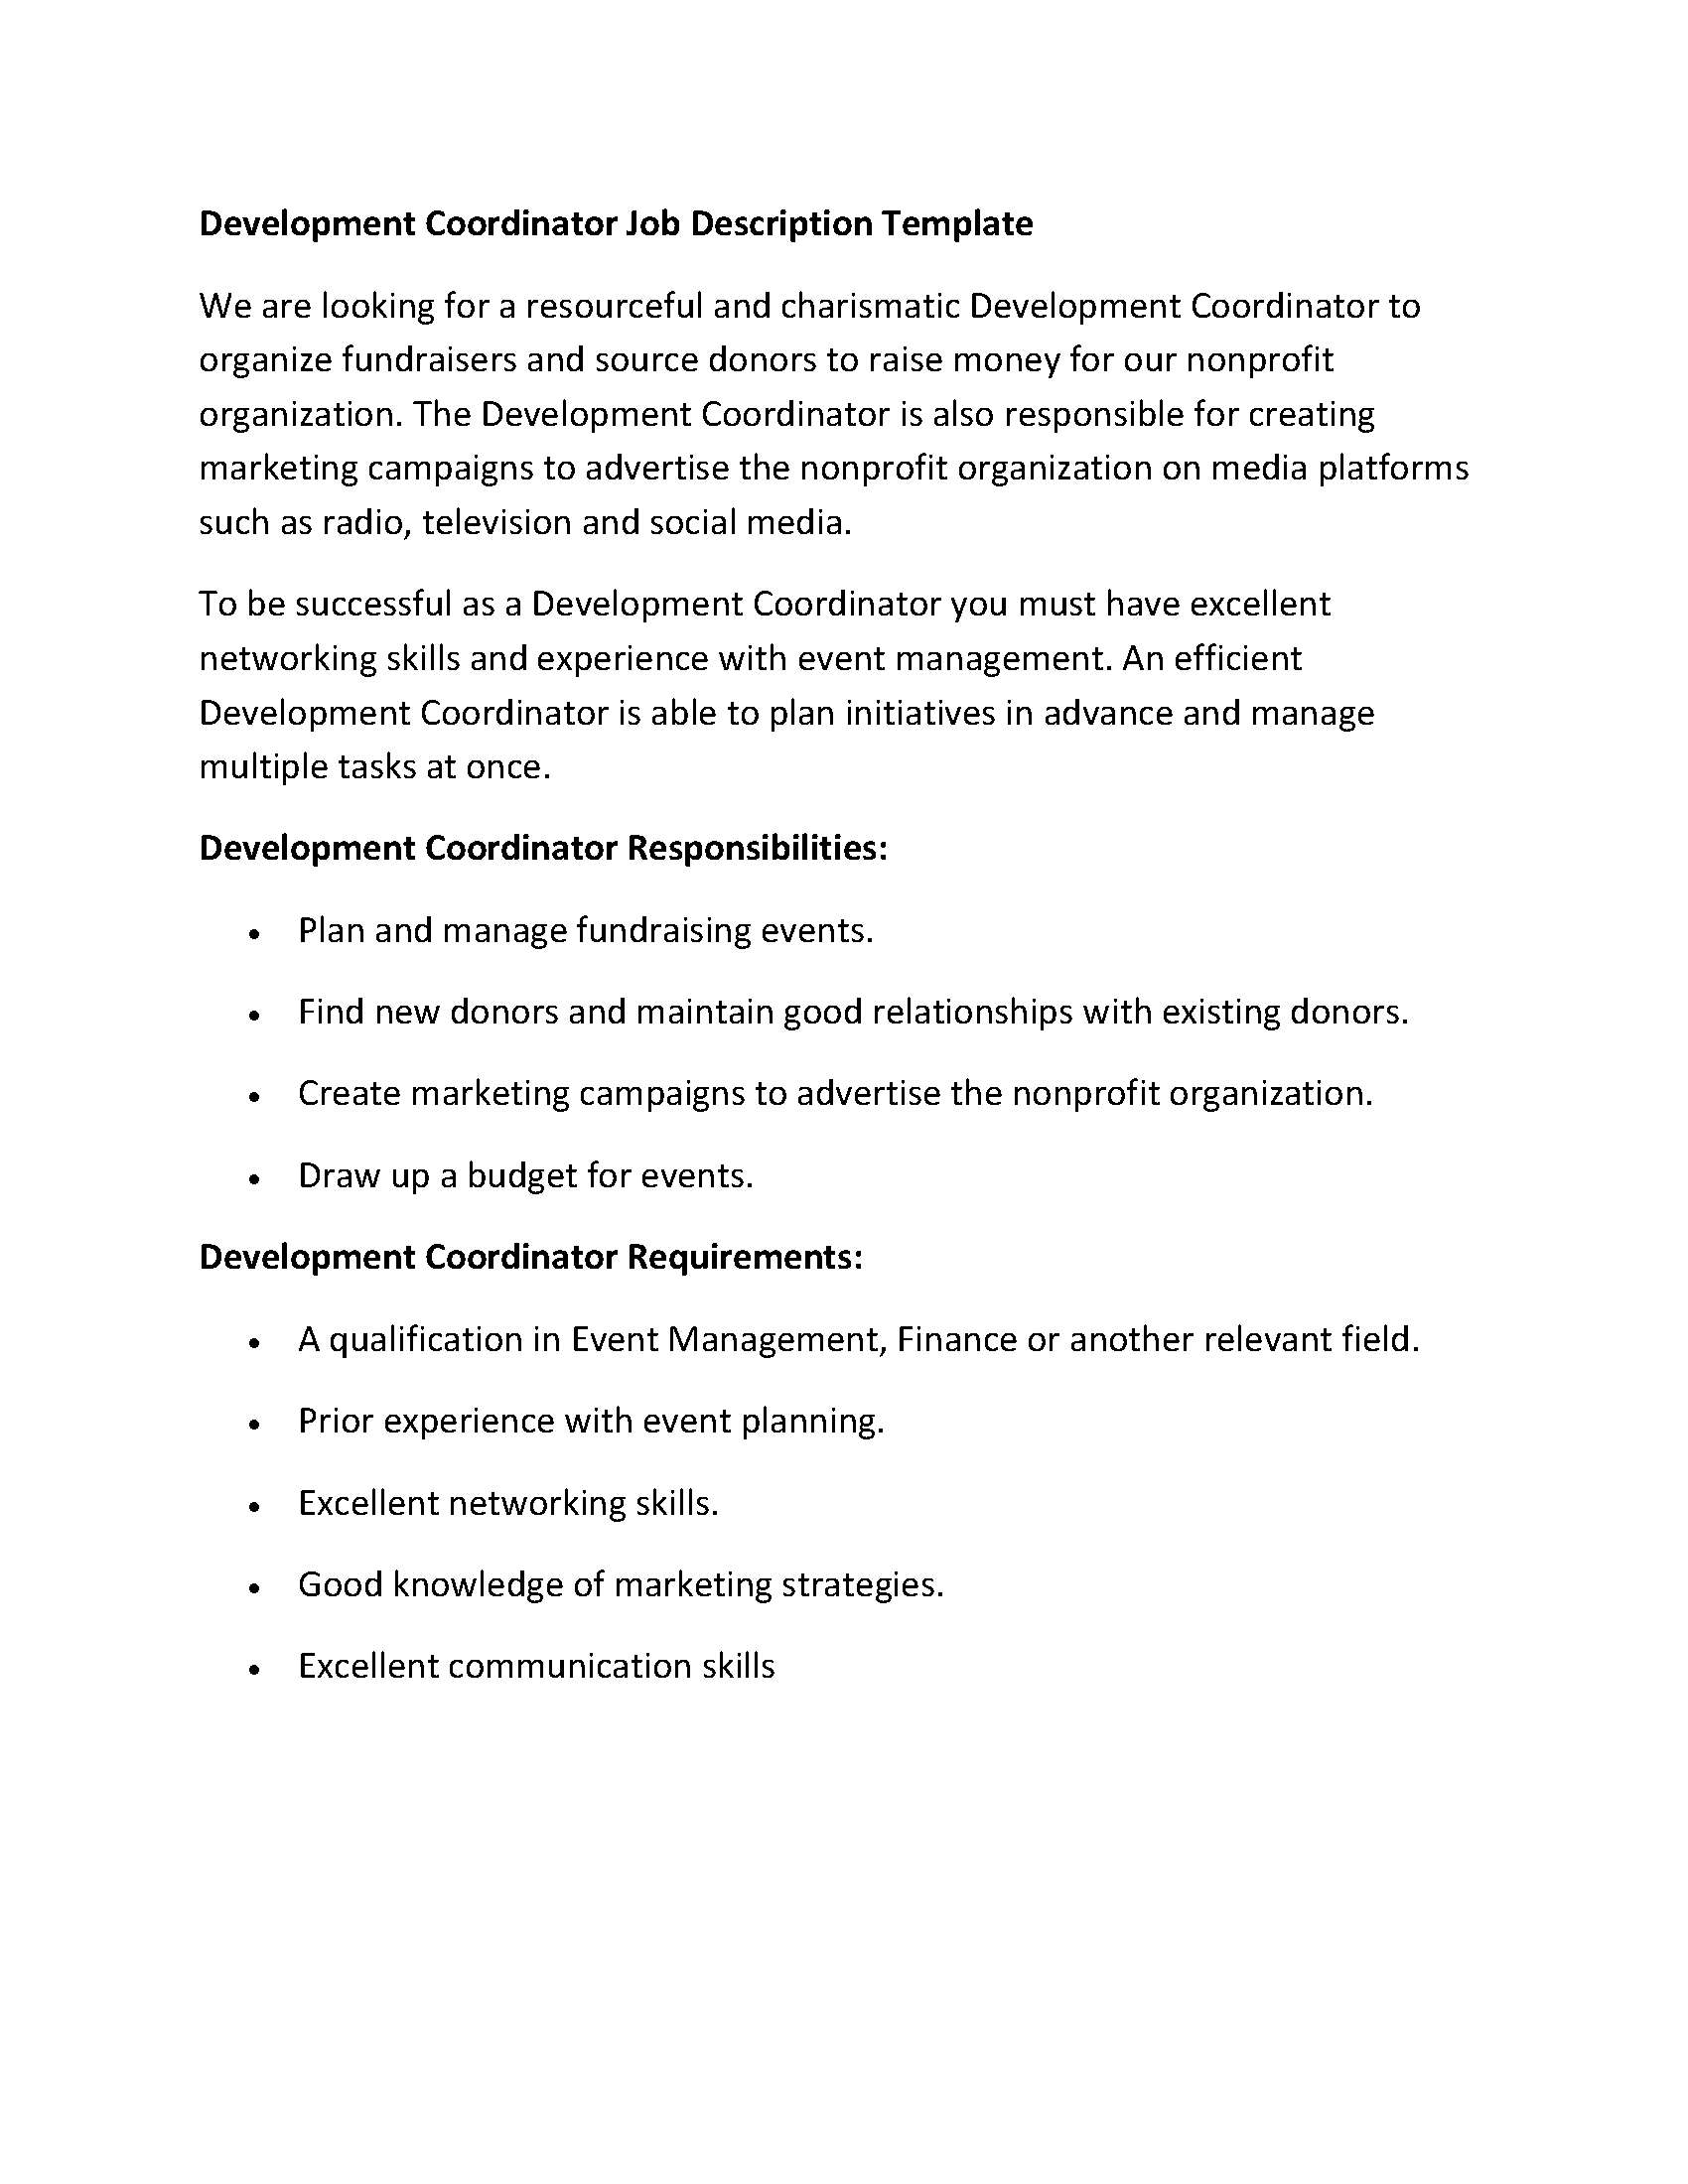 Development Coordinator Job Description Template